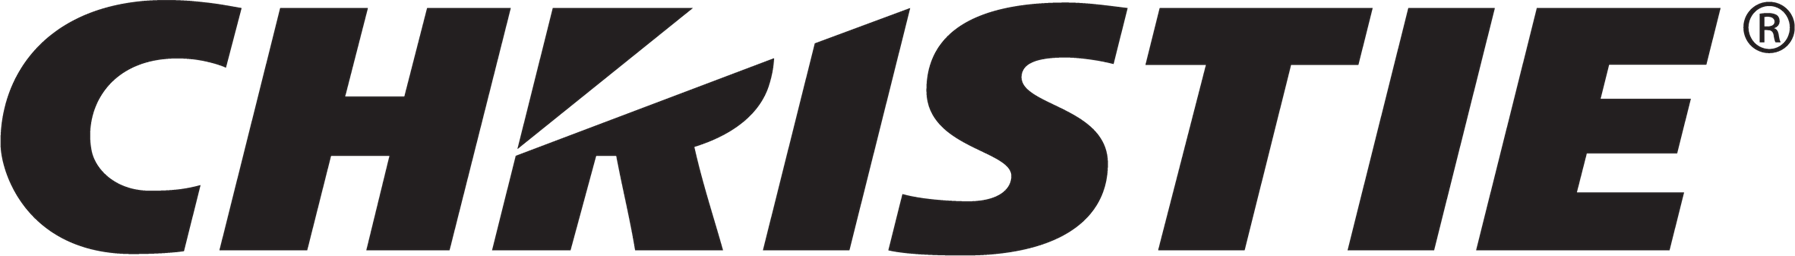 Christie Digital Systems logo